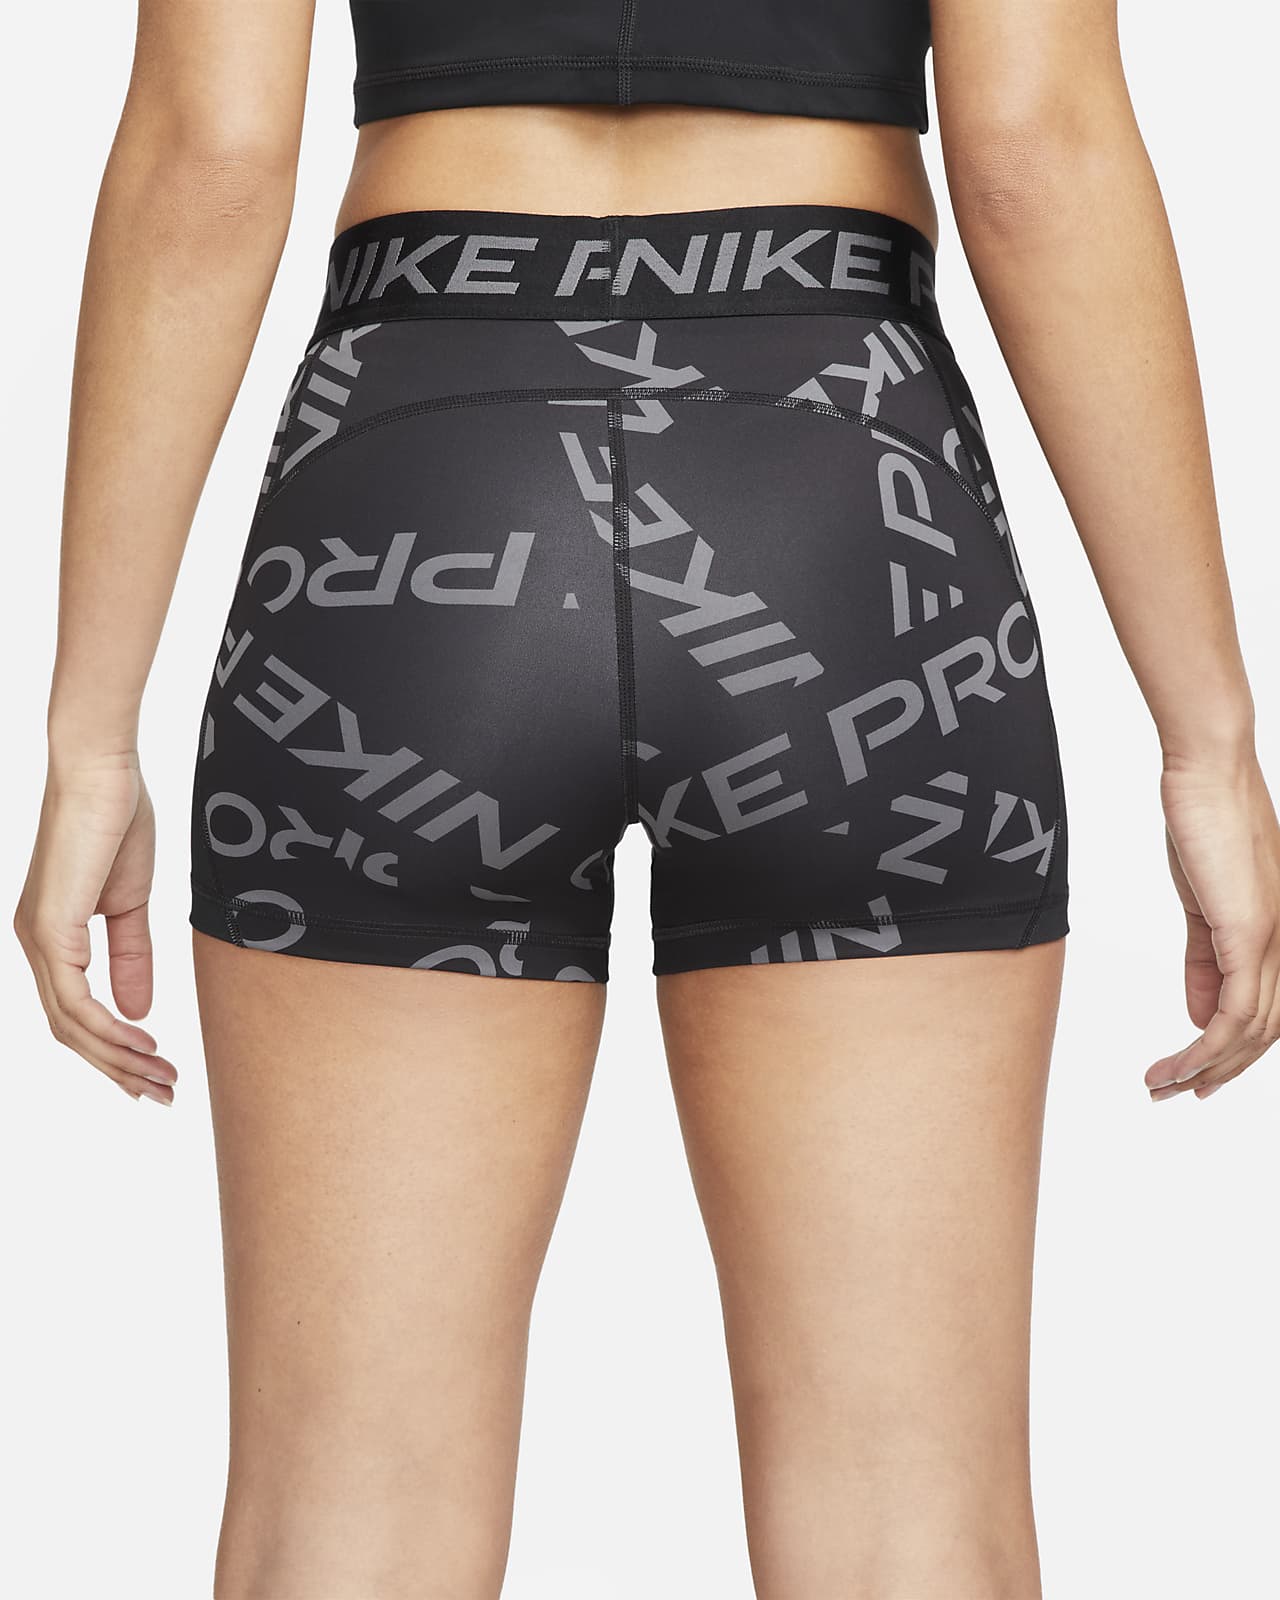 Nike Pro Women's Mid-Rise 3 Printed Shorts.